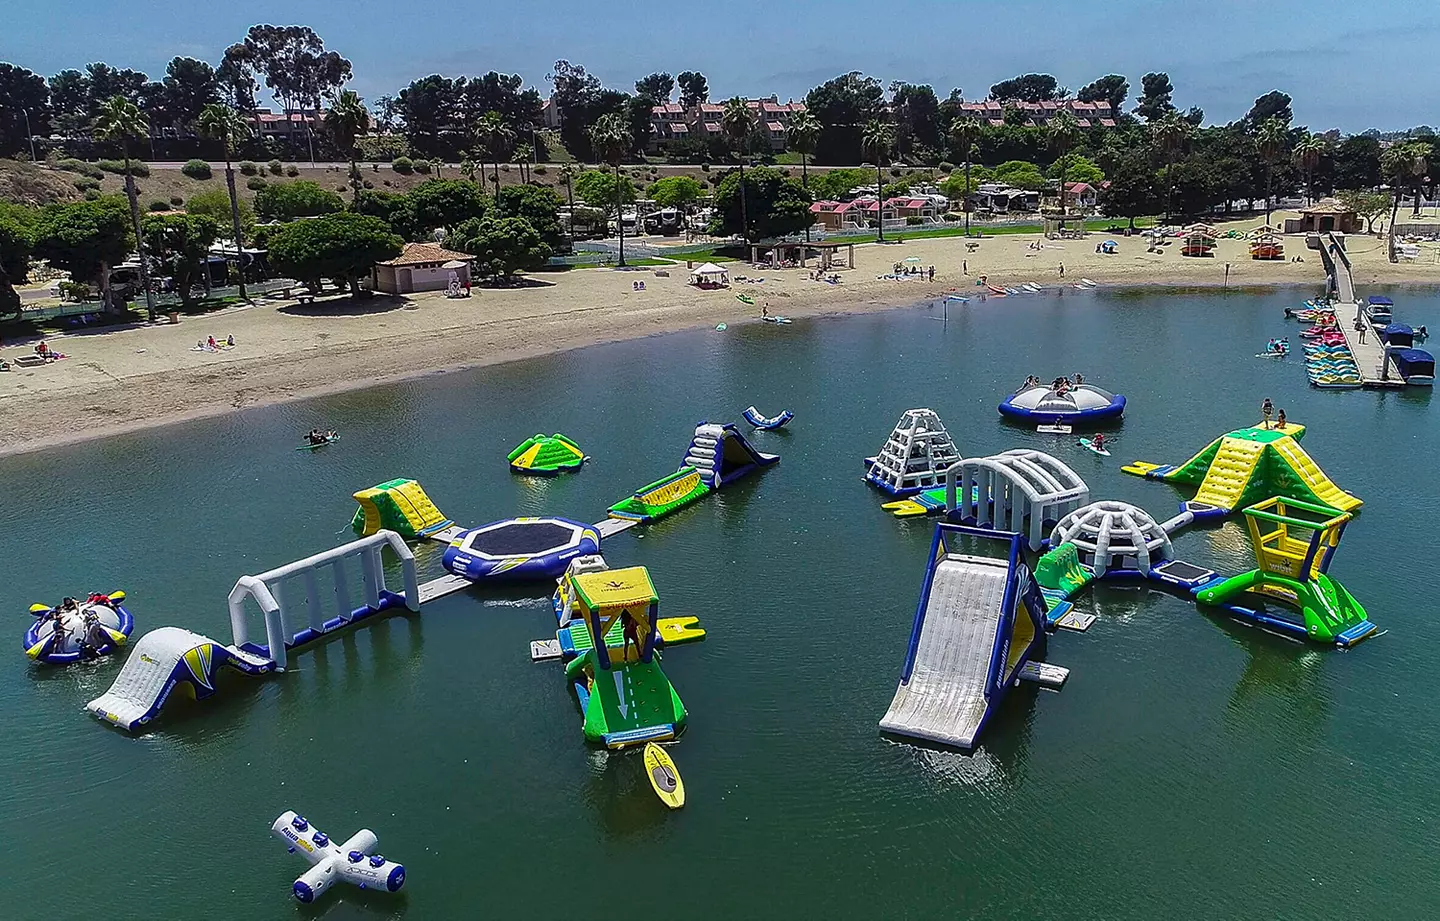 Aerial View of RVs at Newport Dunes Waterfront Resort & Marina in Newport Beach, CA